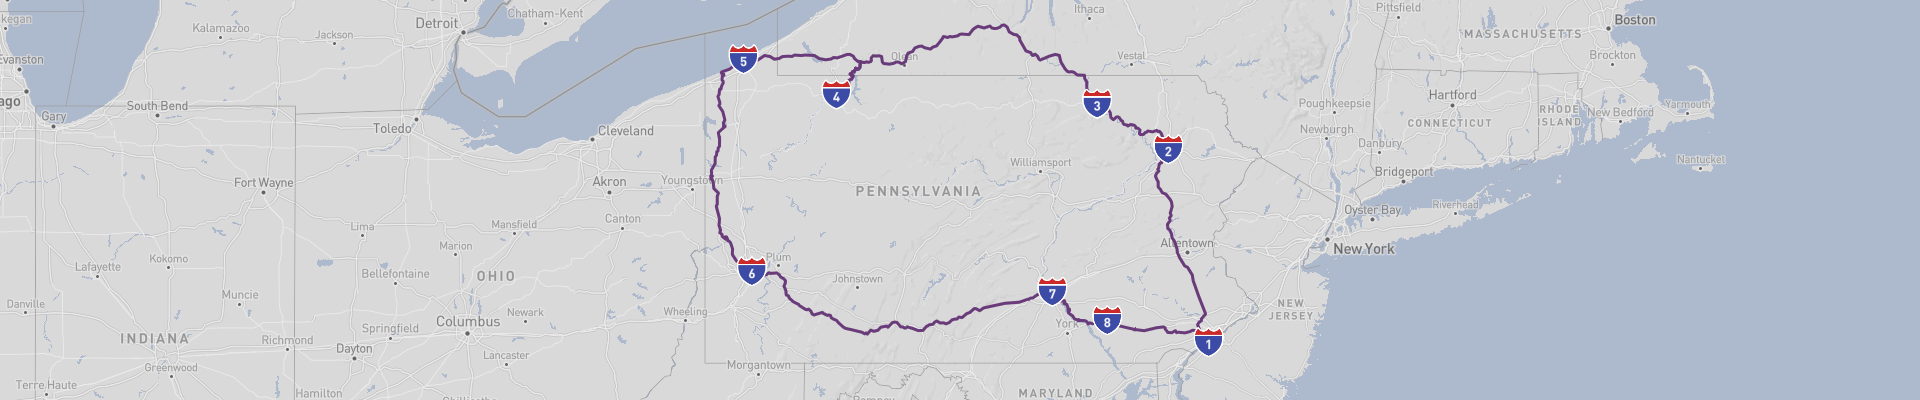 Pennsylvania Road Trip